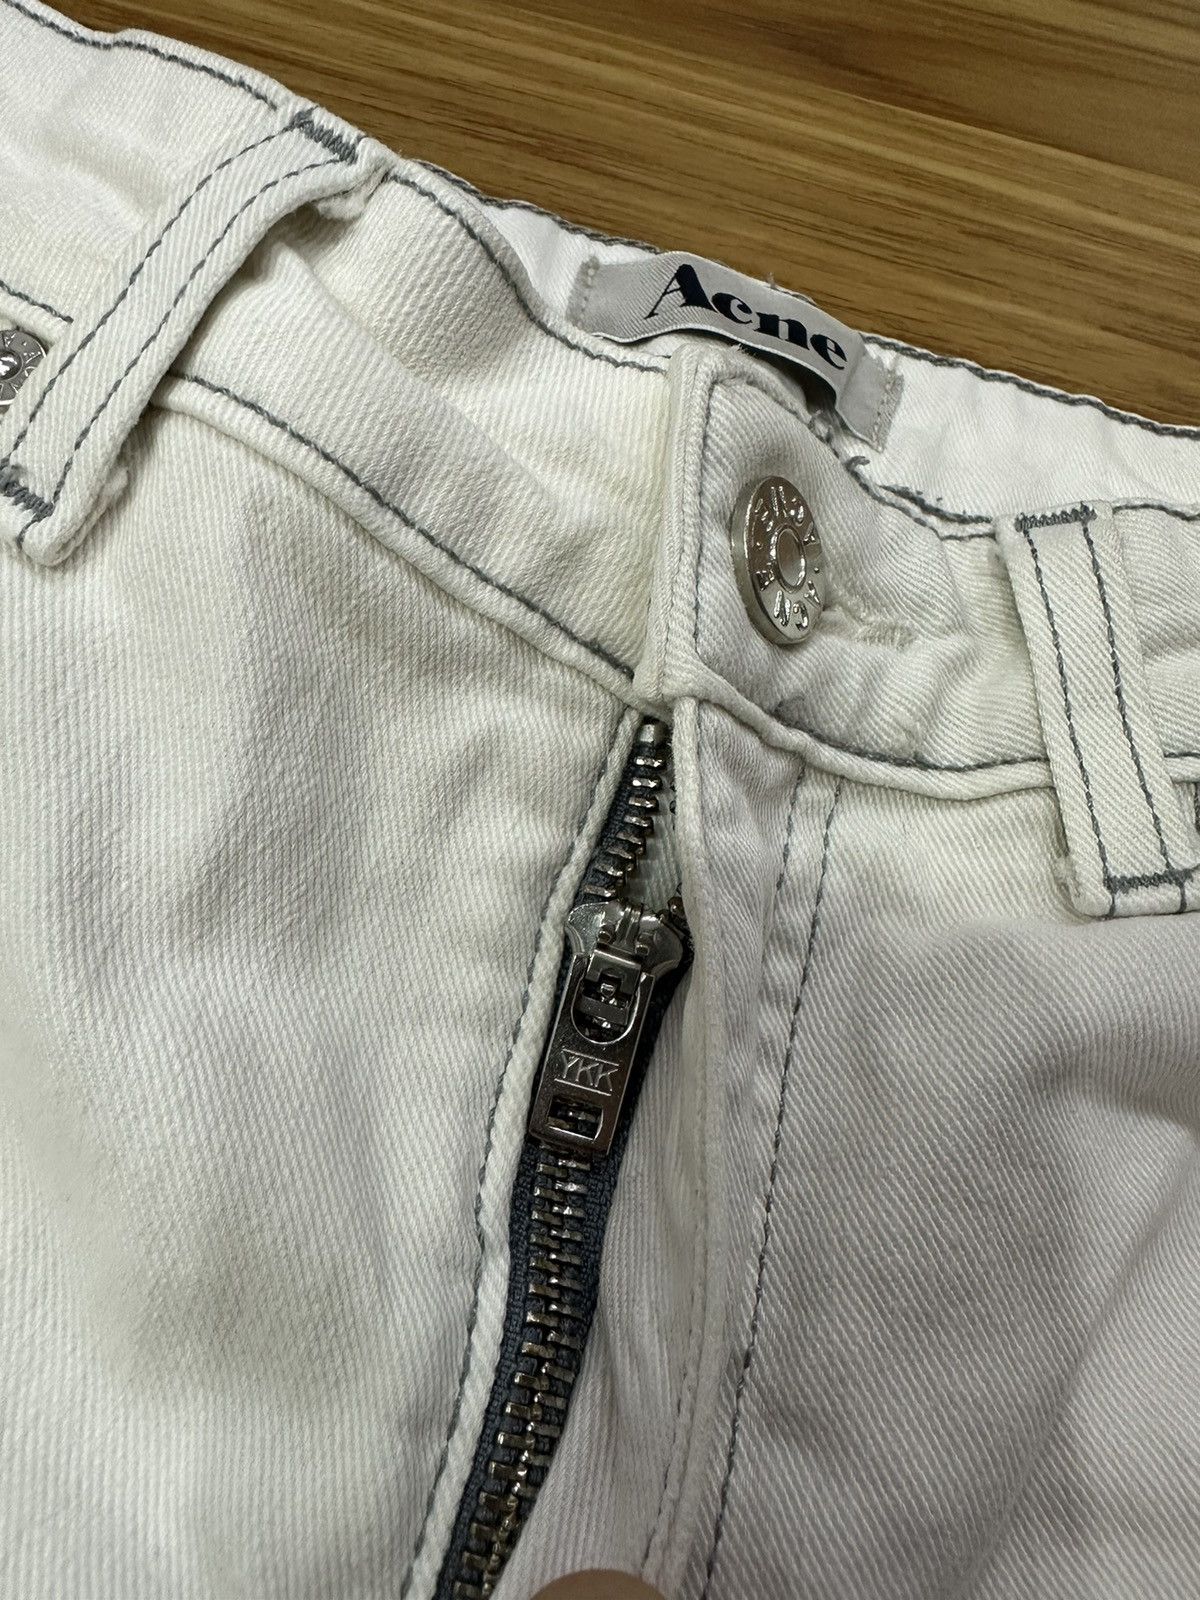 SS15 Acne Studios White Skinny Jeans - 9